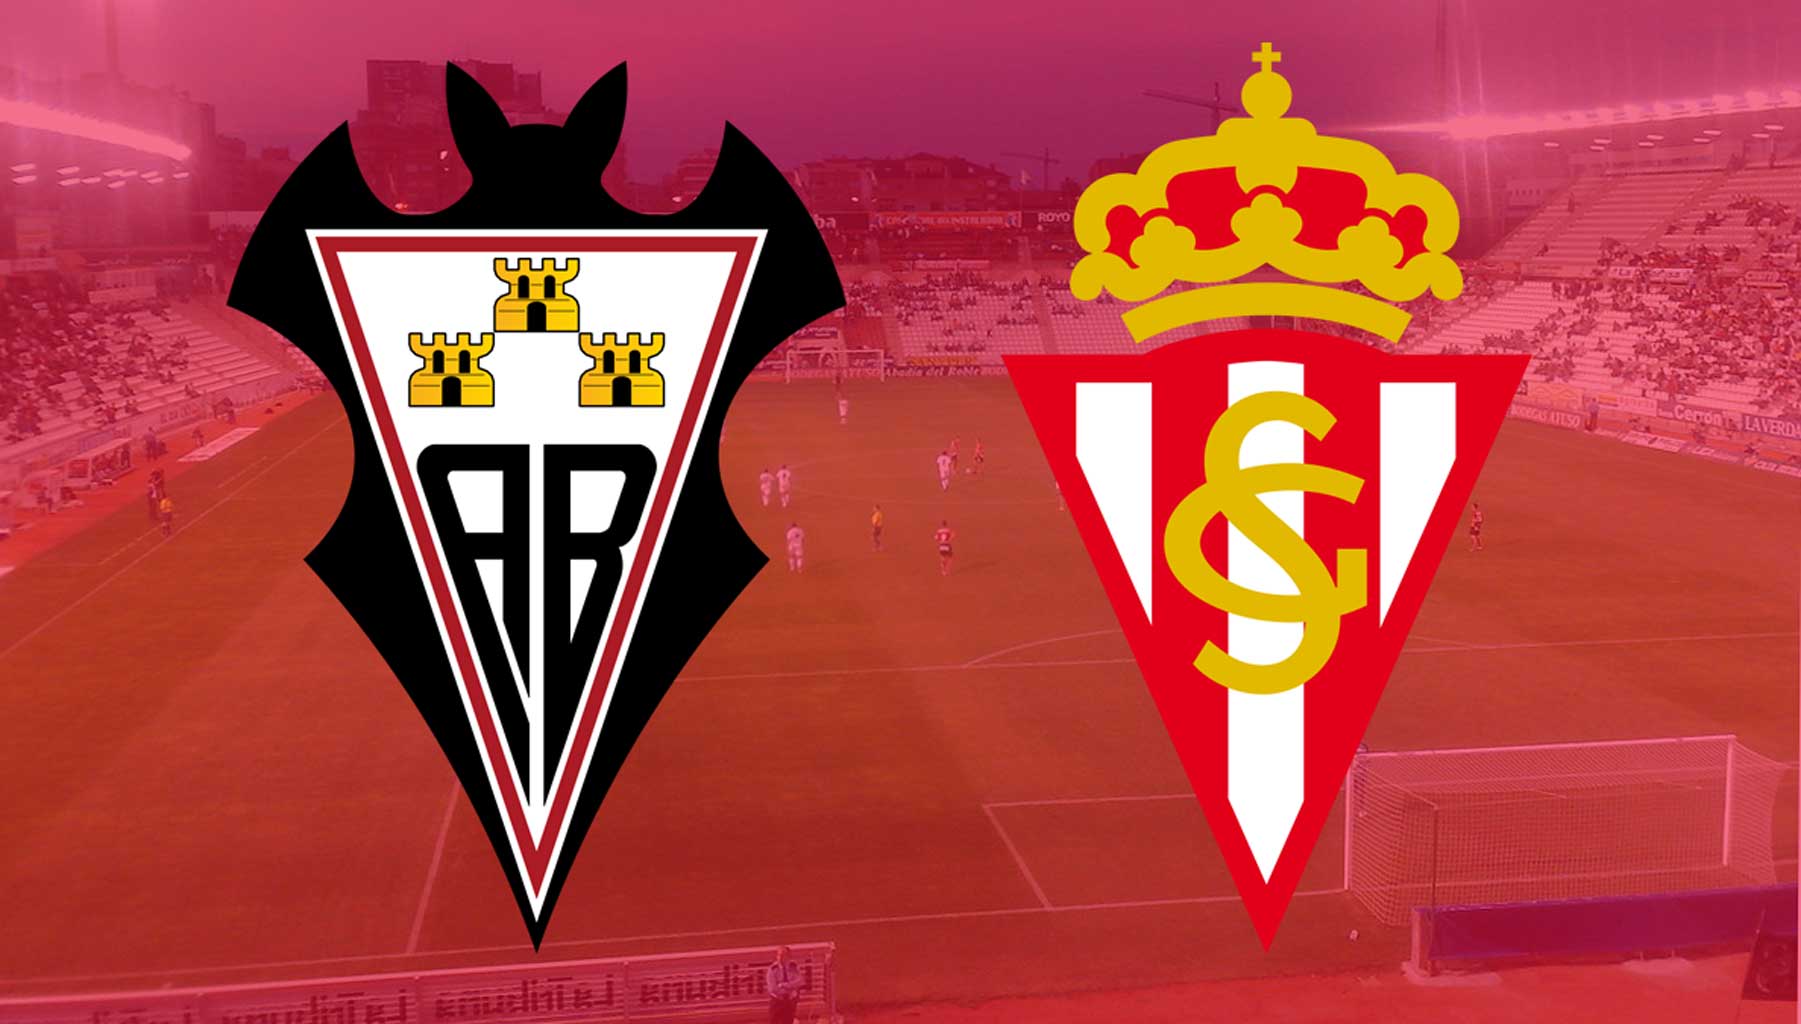 ? Directo Jornada 26 | Albacete B. - Real Sporting de Gijón Sporting1905